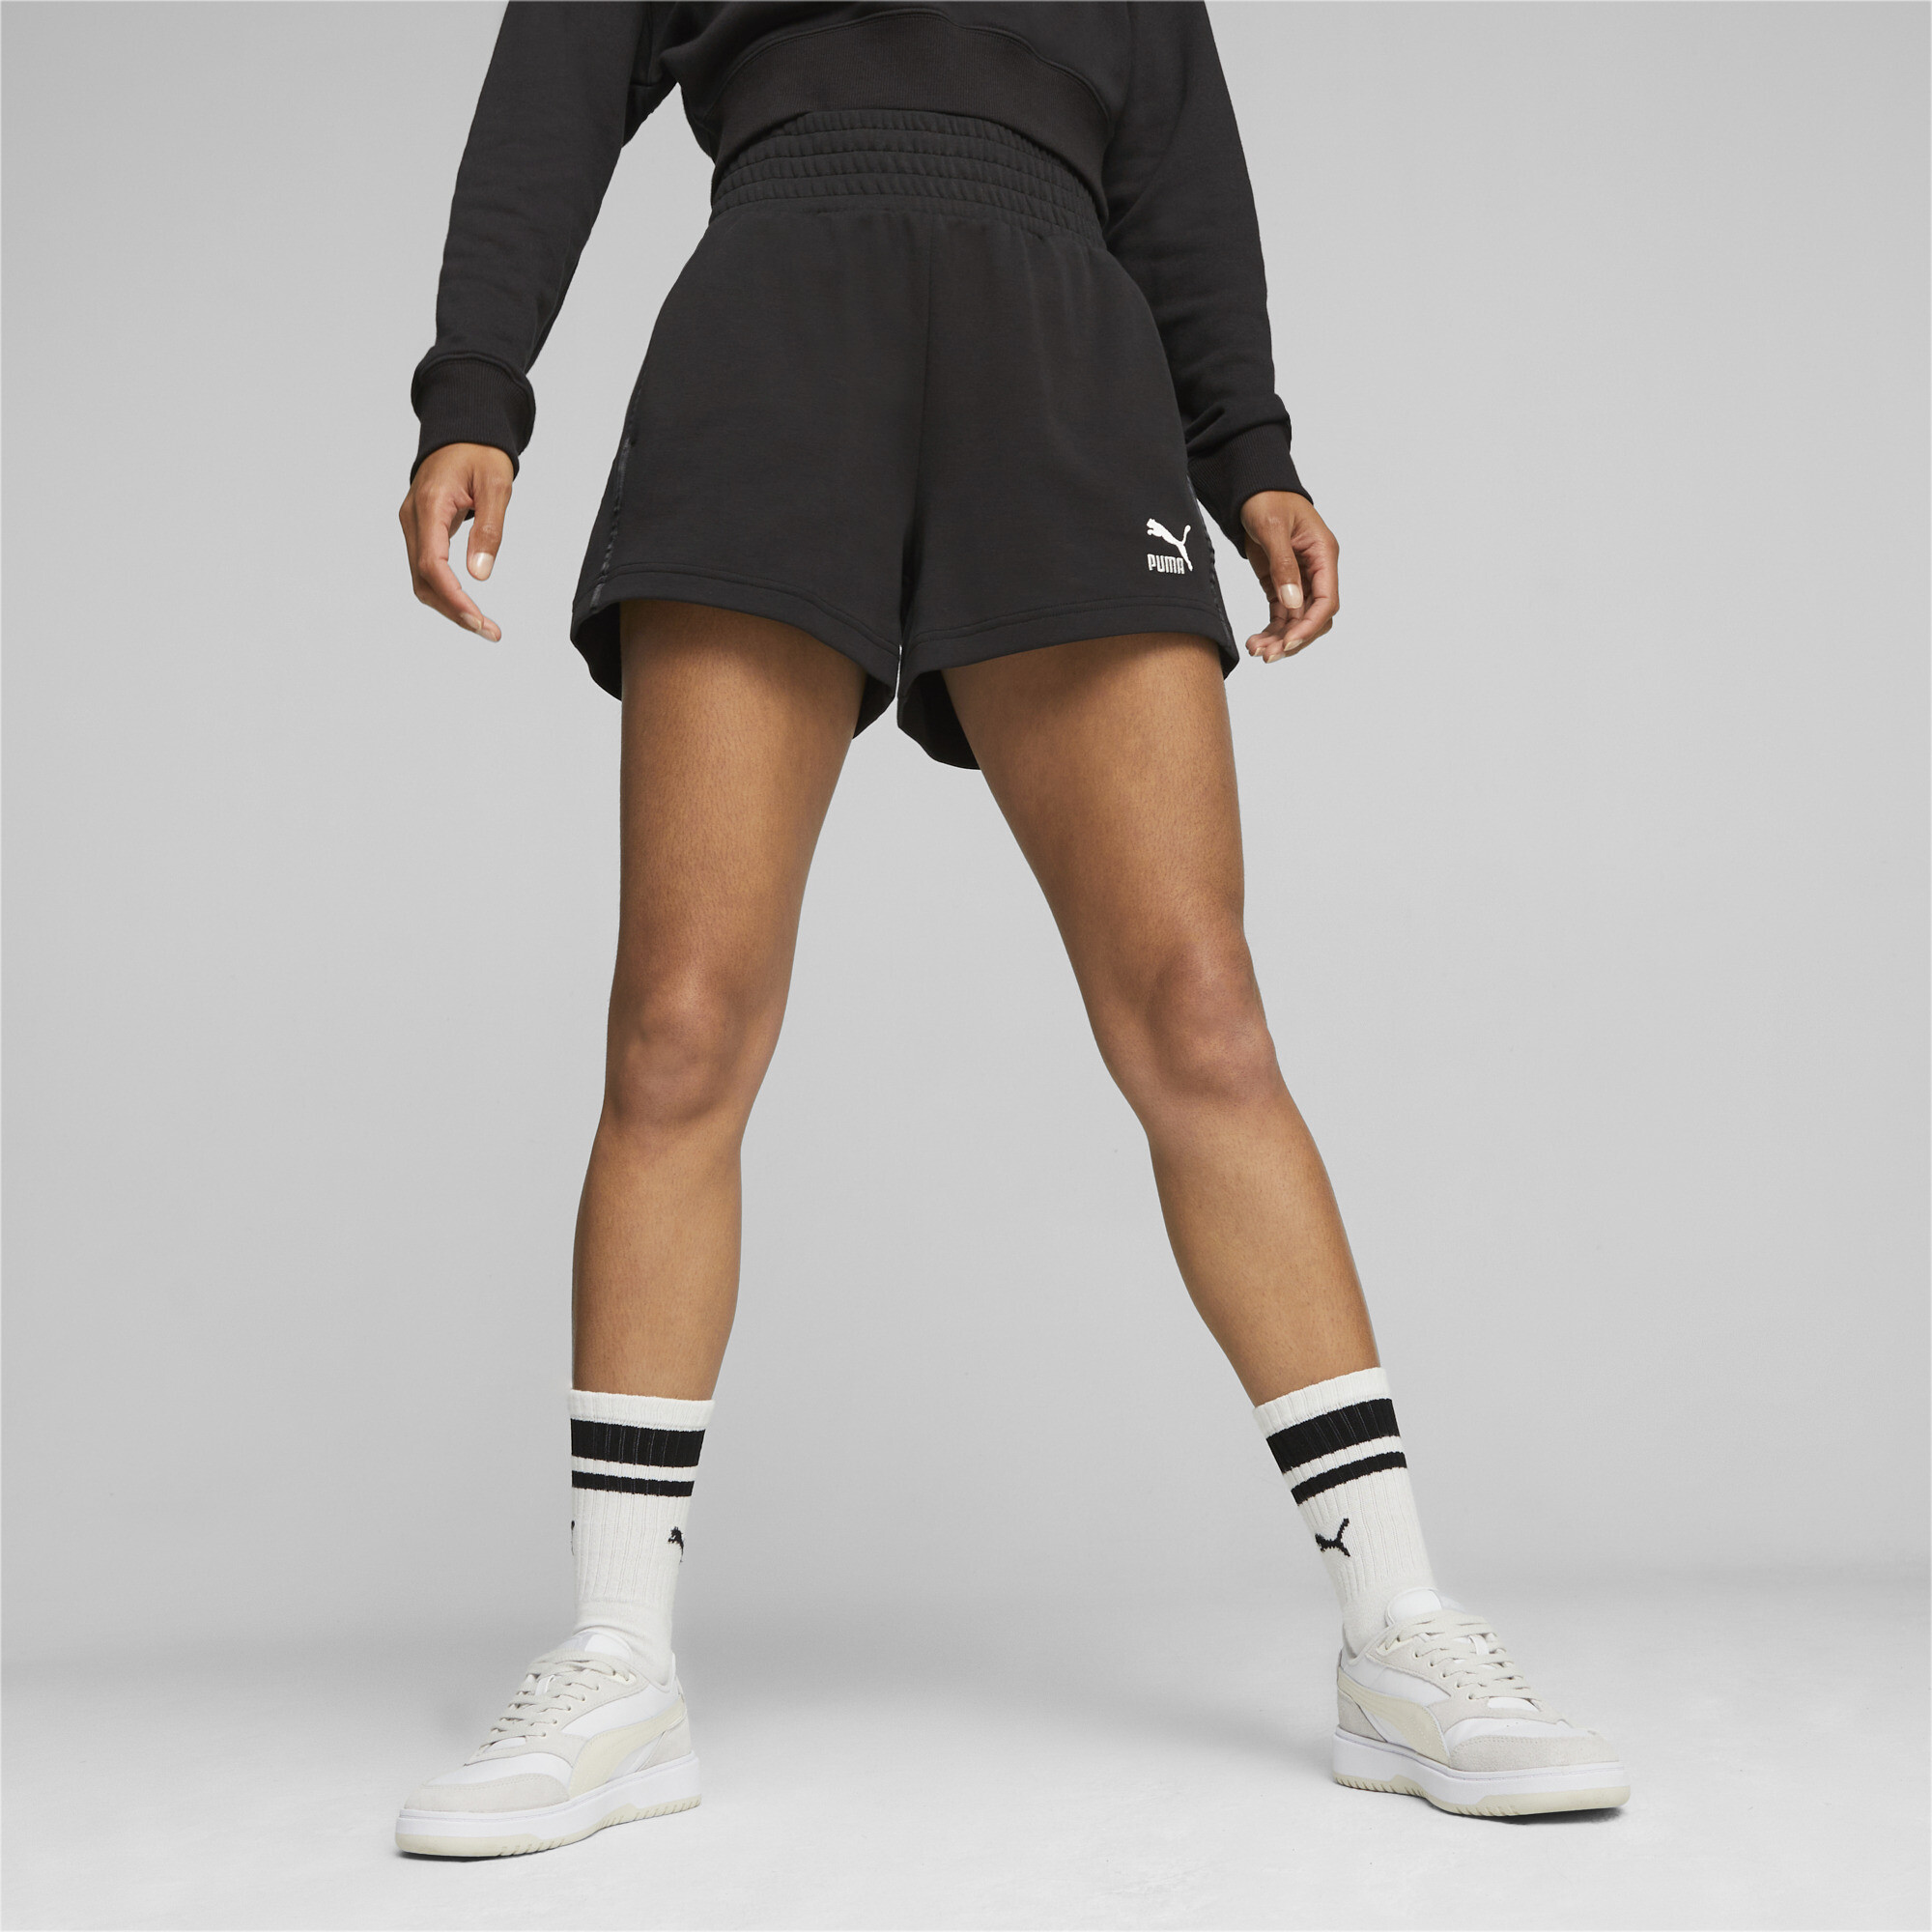 Women's Puma T7's High Waist Shorts, Black, Size XS, Clothing